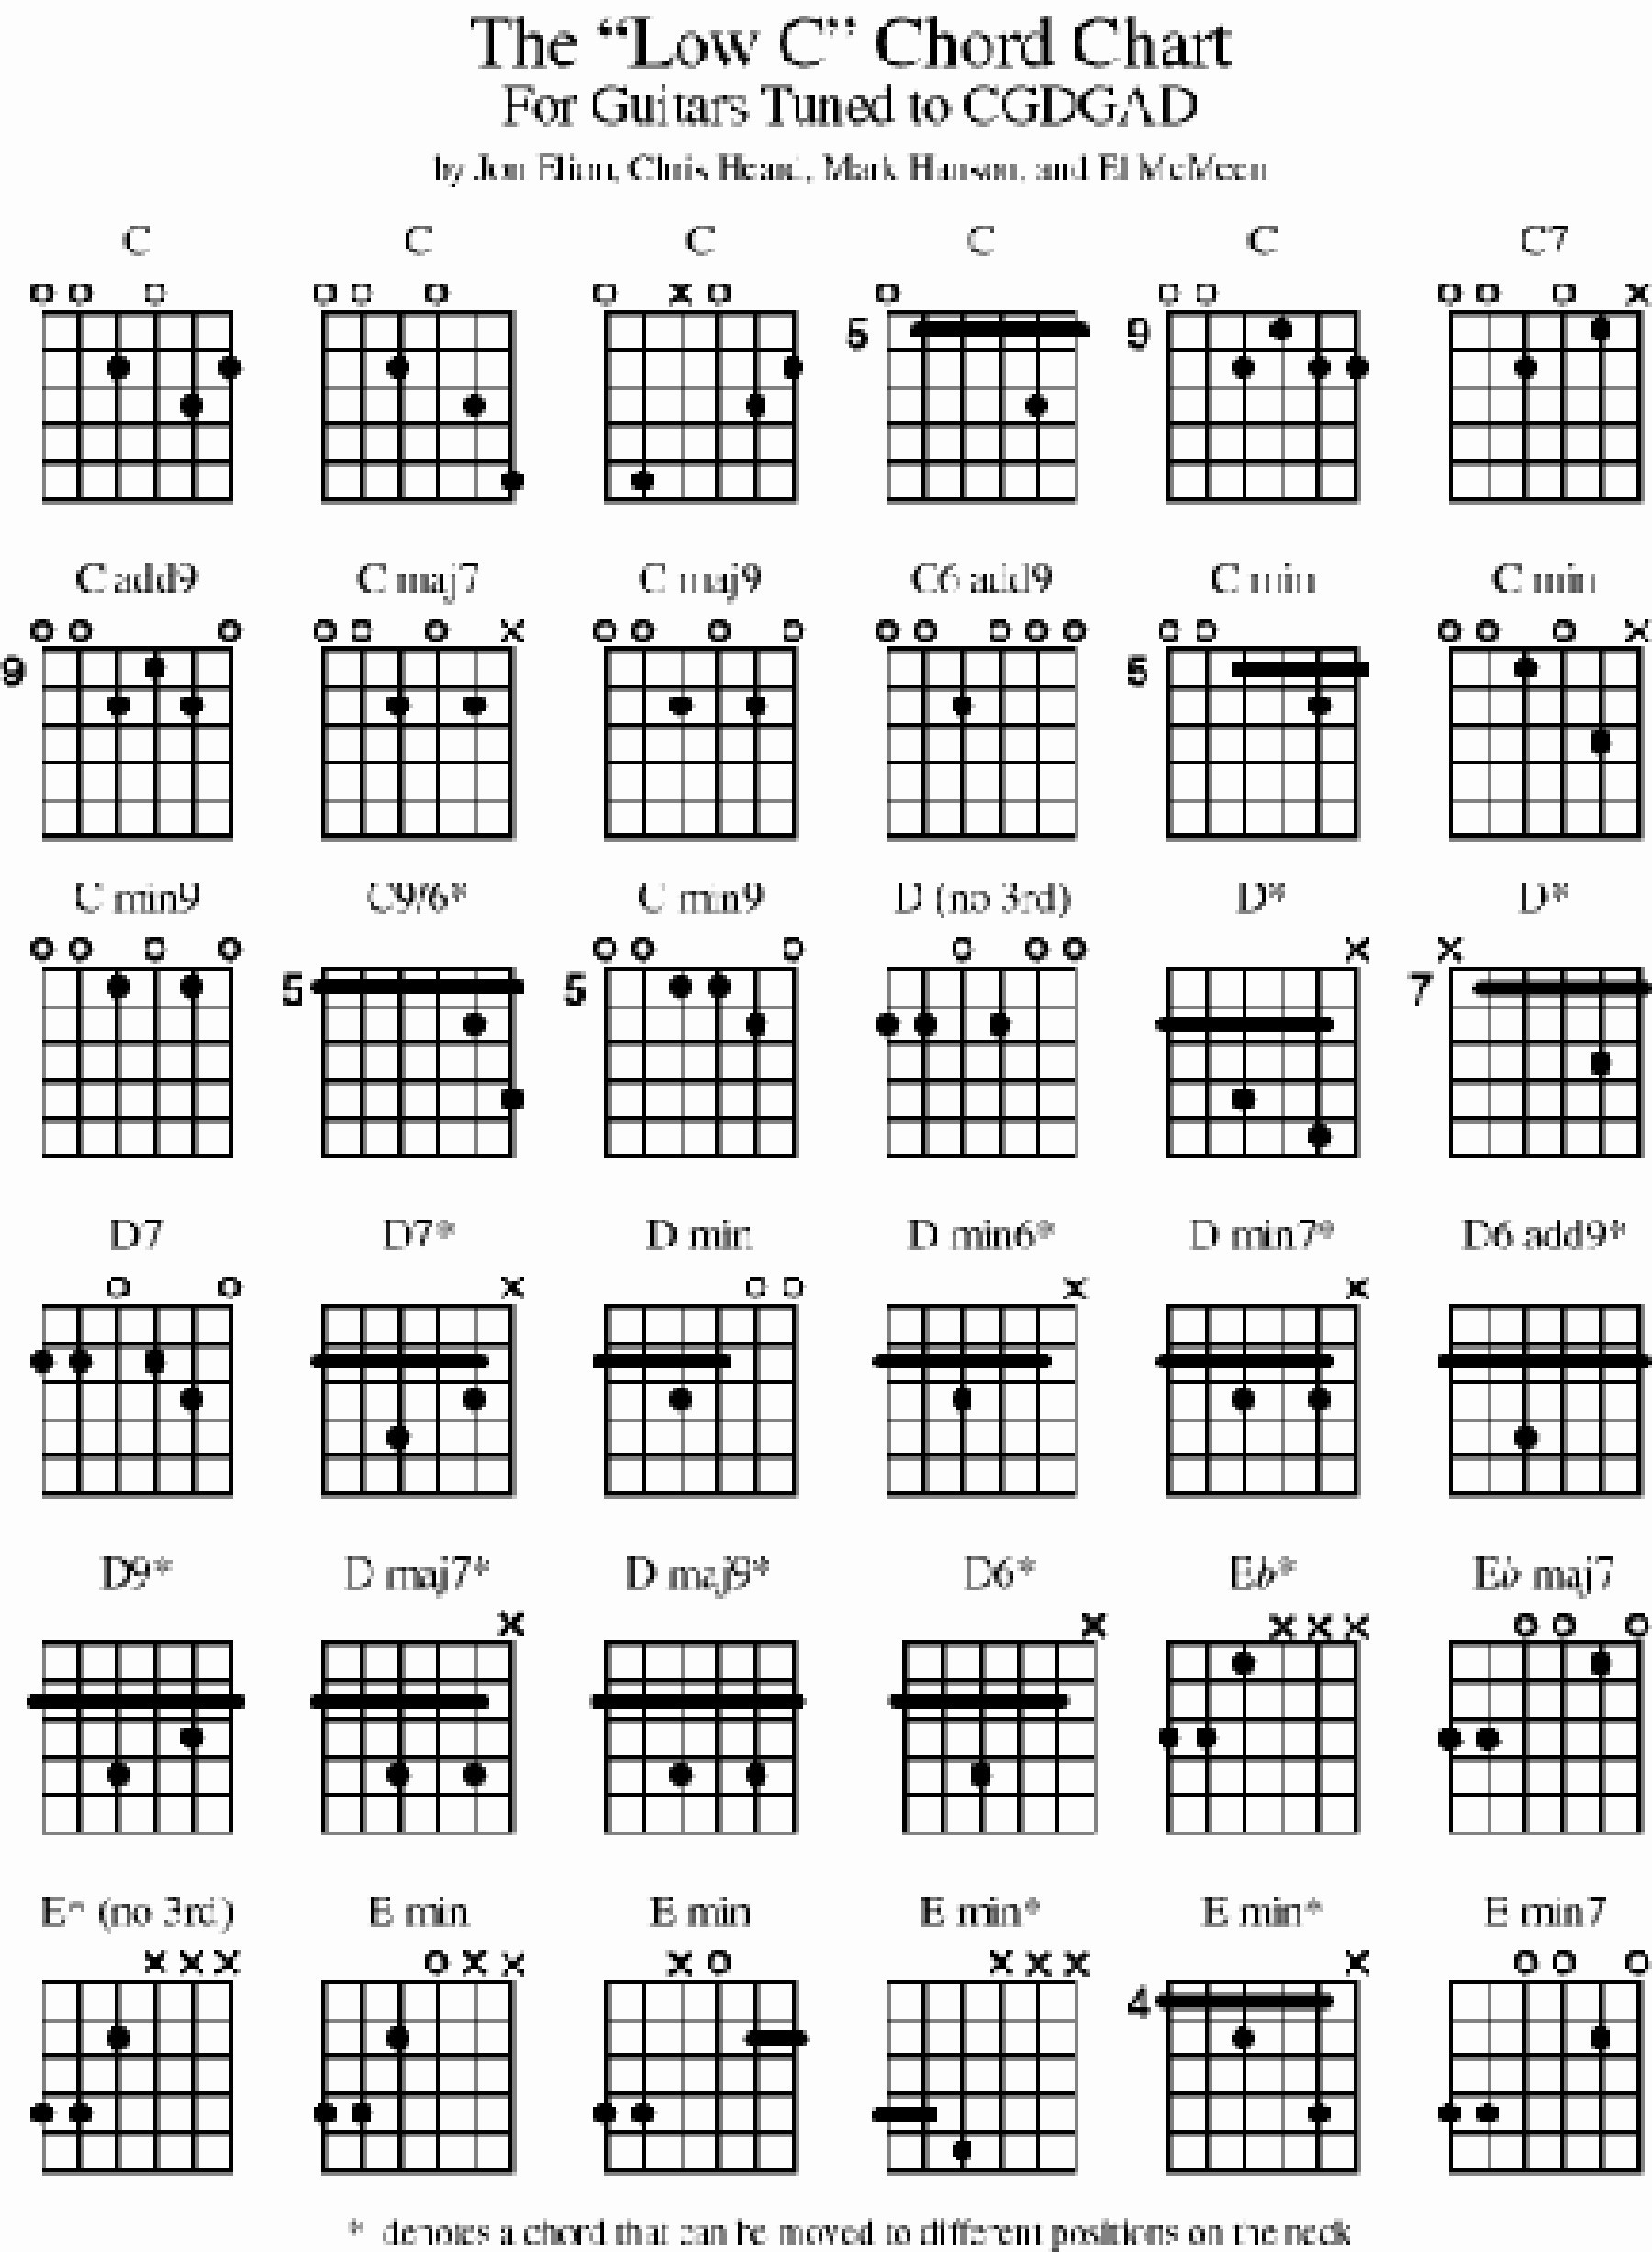 Bass Chord Chart | Accomplice Music - Free Printable Bass Guitar Chord Chart